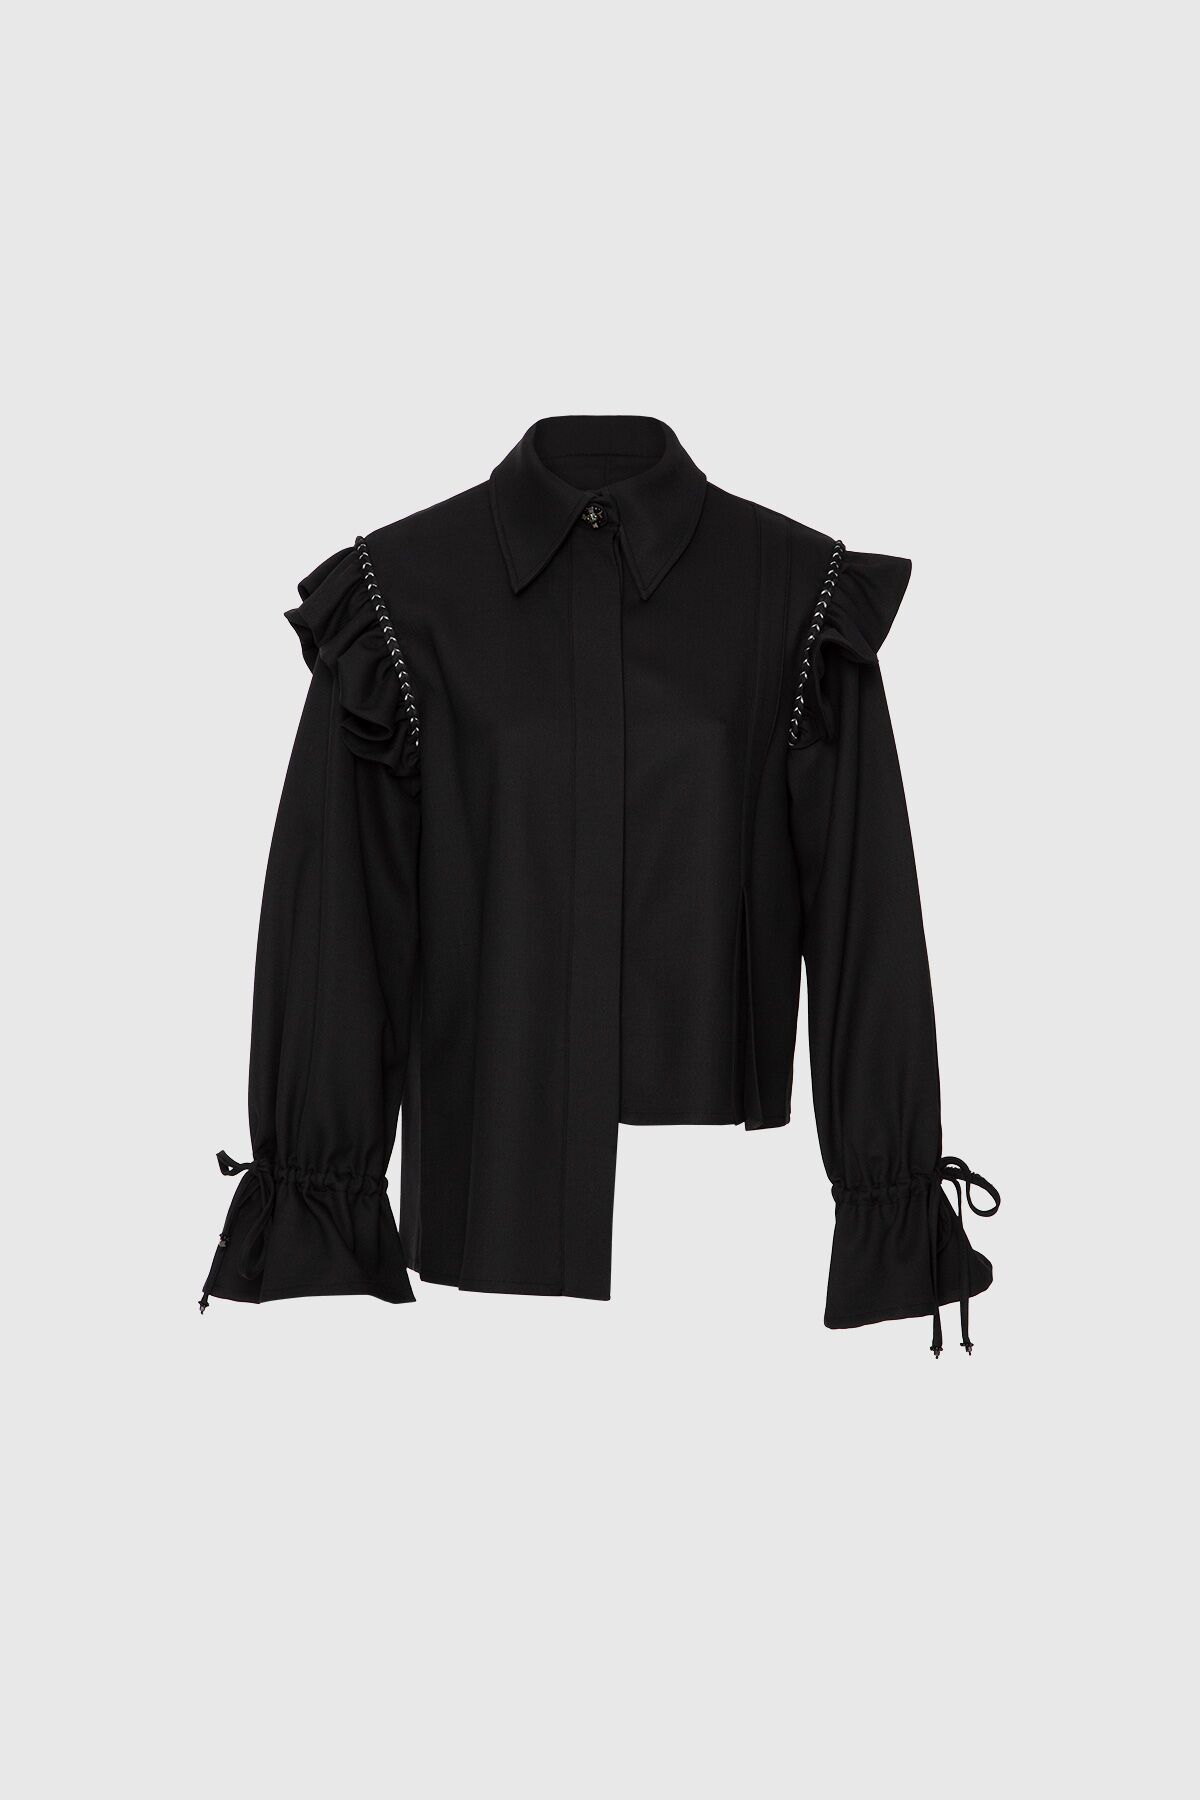  GIZIA - Asymmetrical Cut Black Shirt with Flywheel Detail on the Sleeves